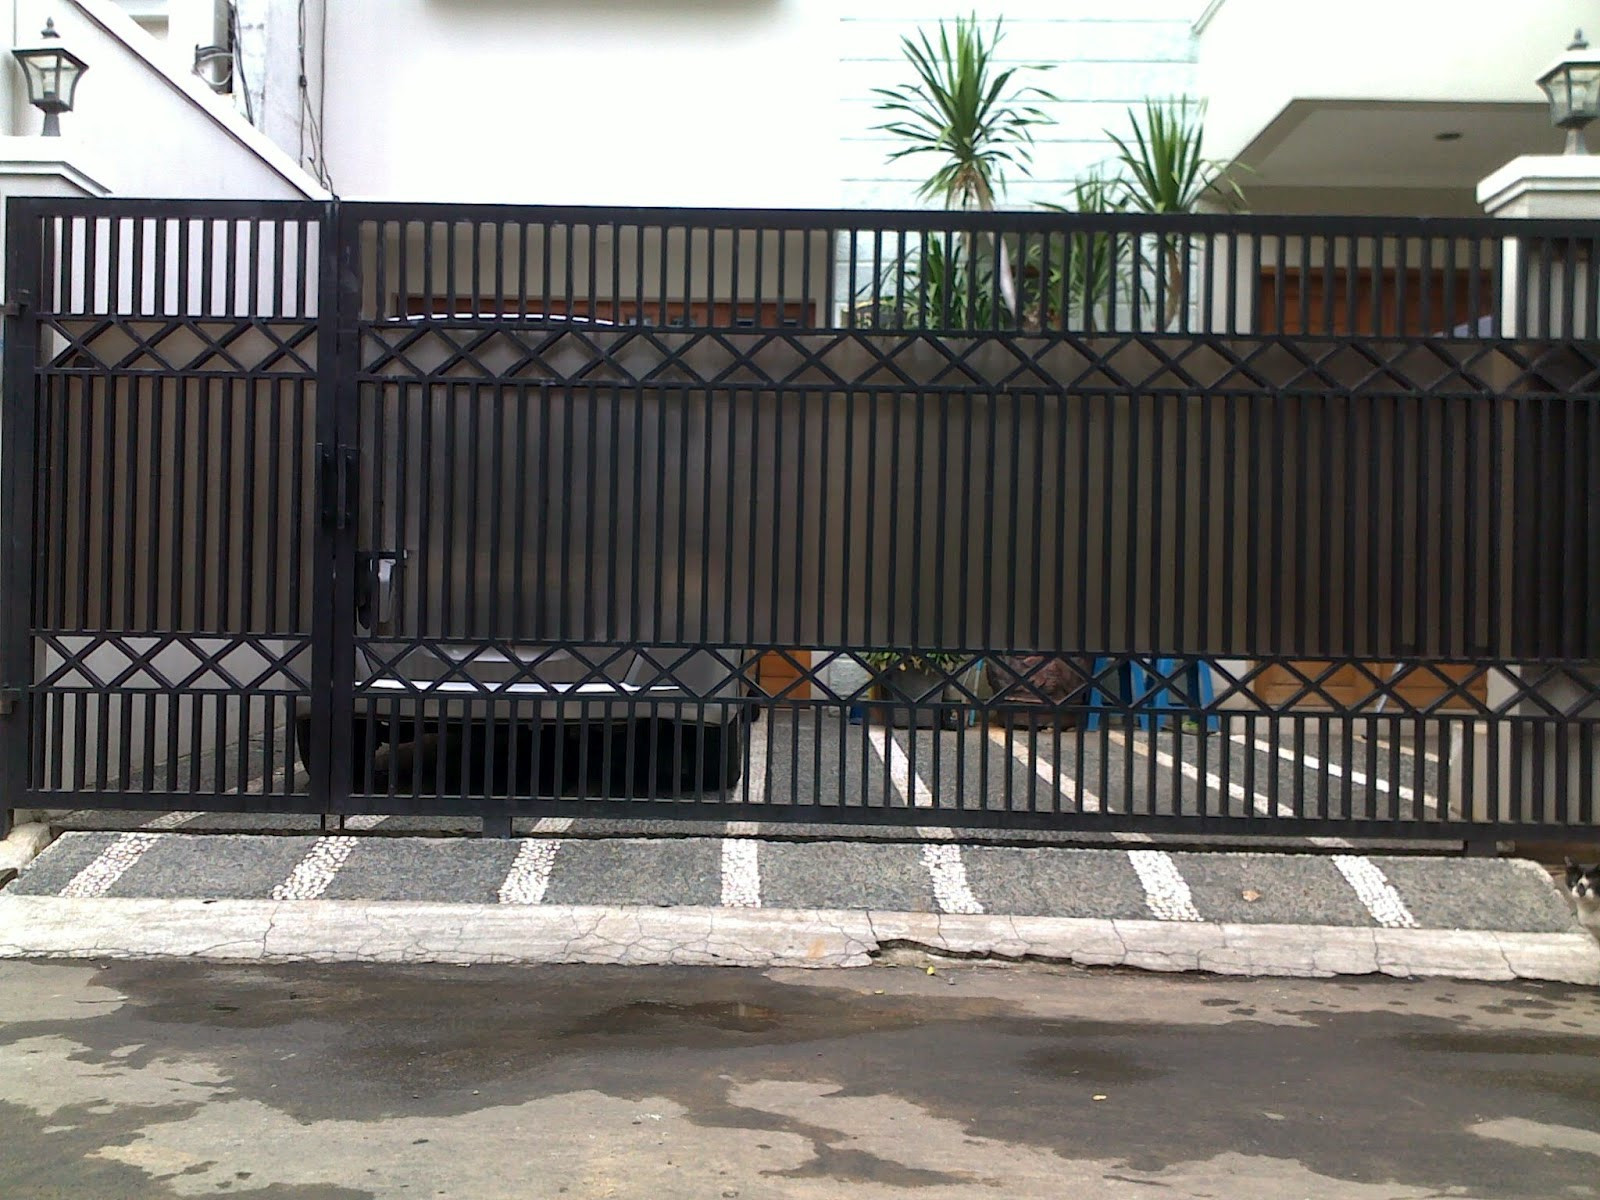 gambar pagar besi minimalis terbaru 2014 jaya mulya